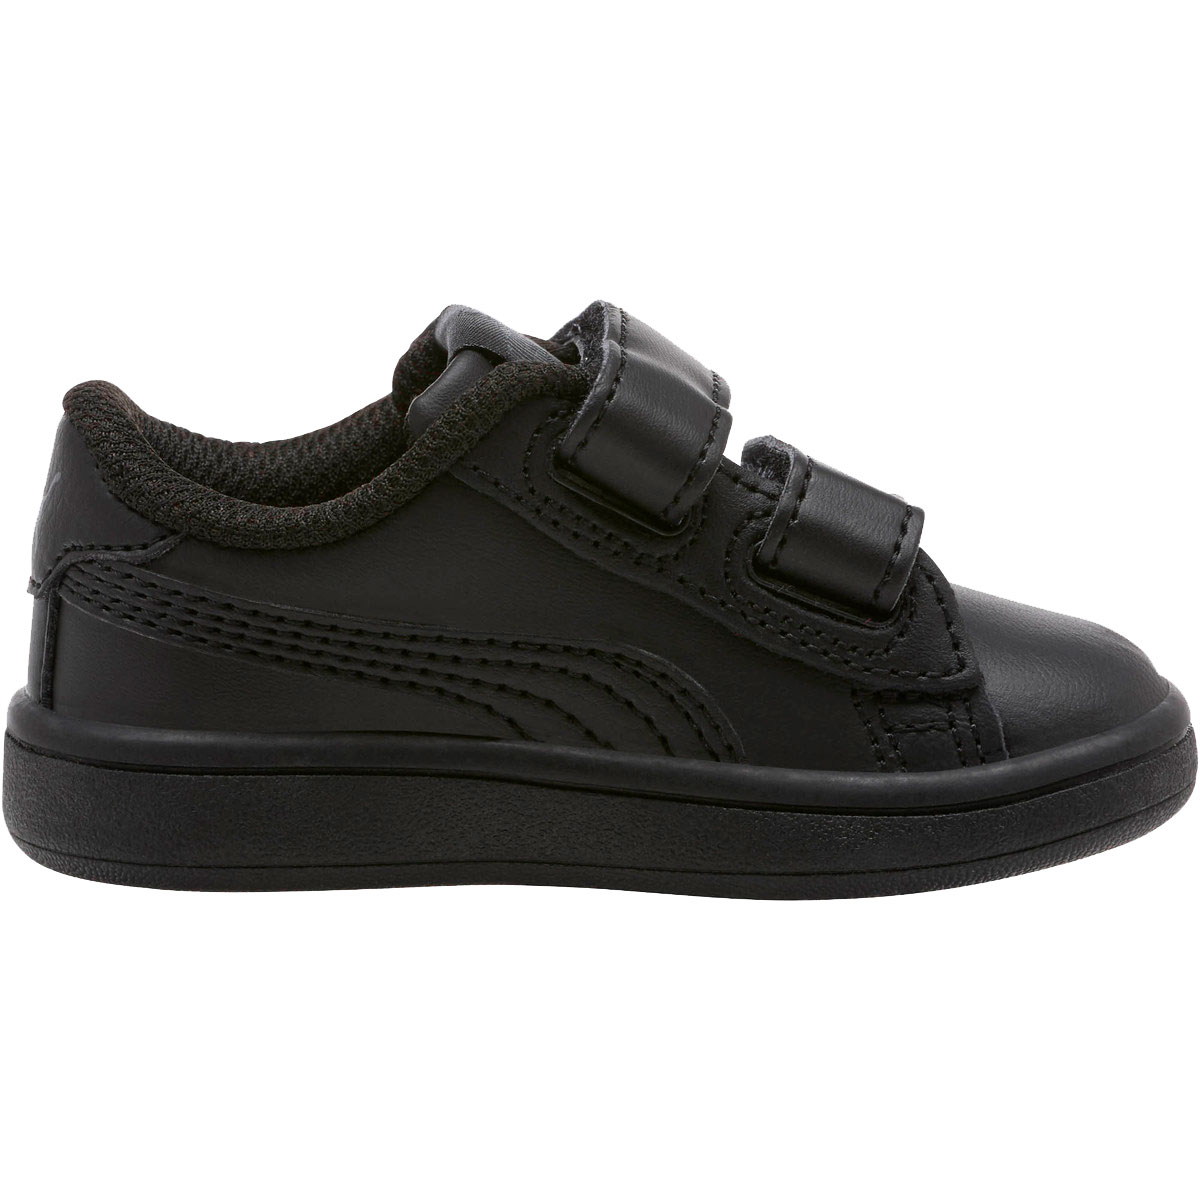 Puma Toddler Boys' Smash V2 Lv Sneakers - Black, 9